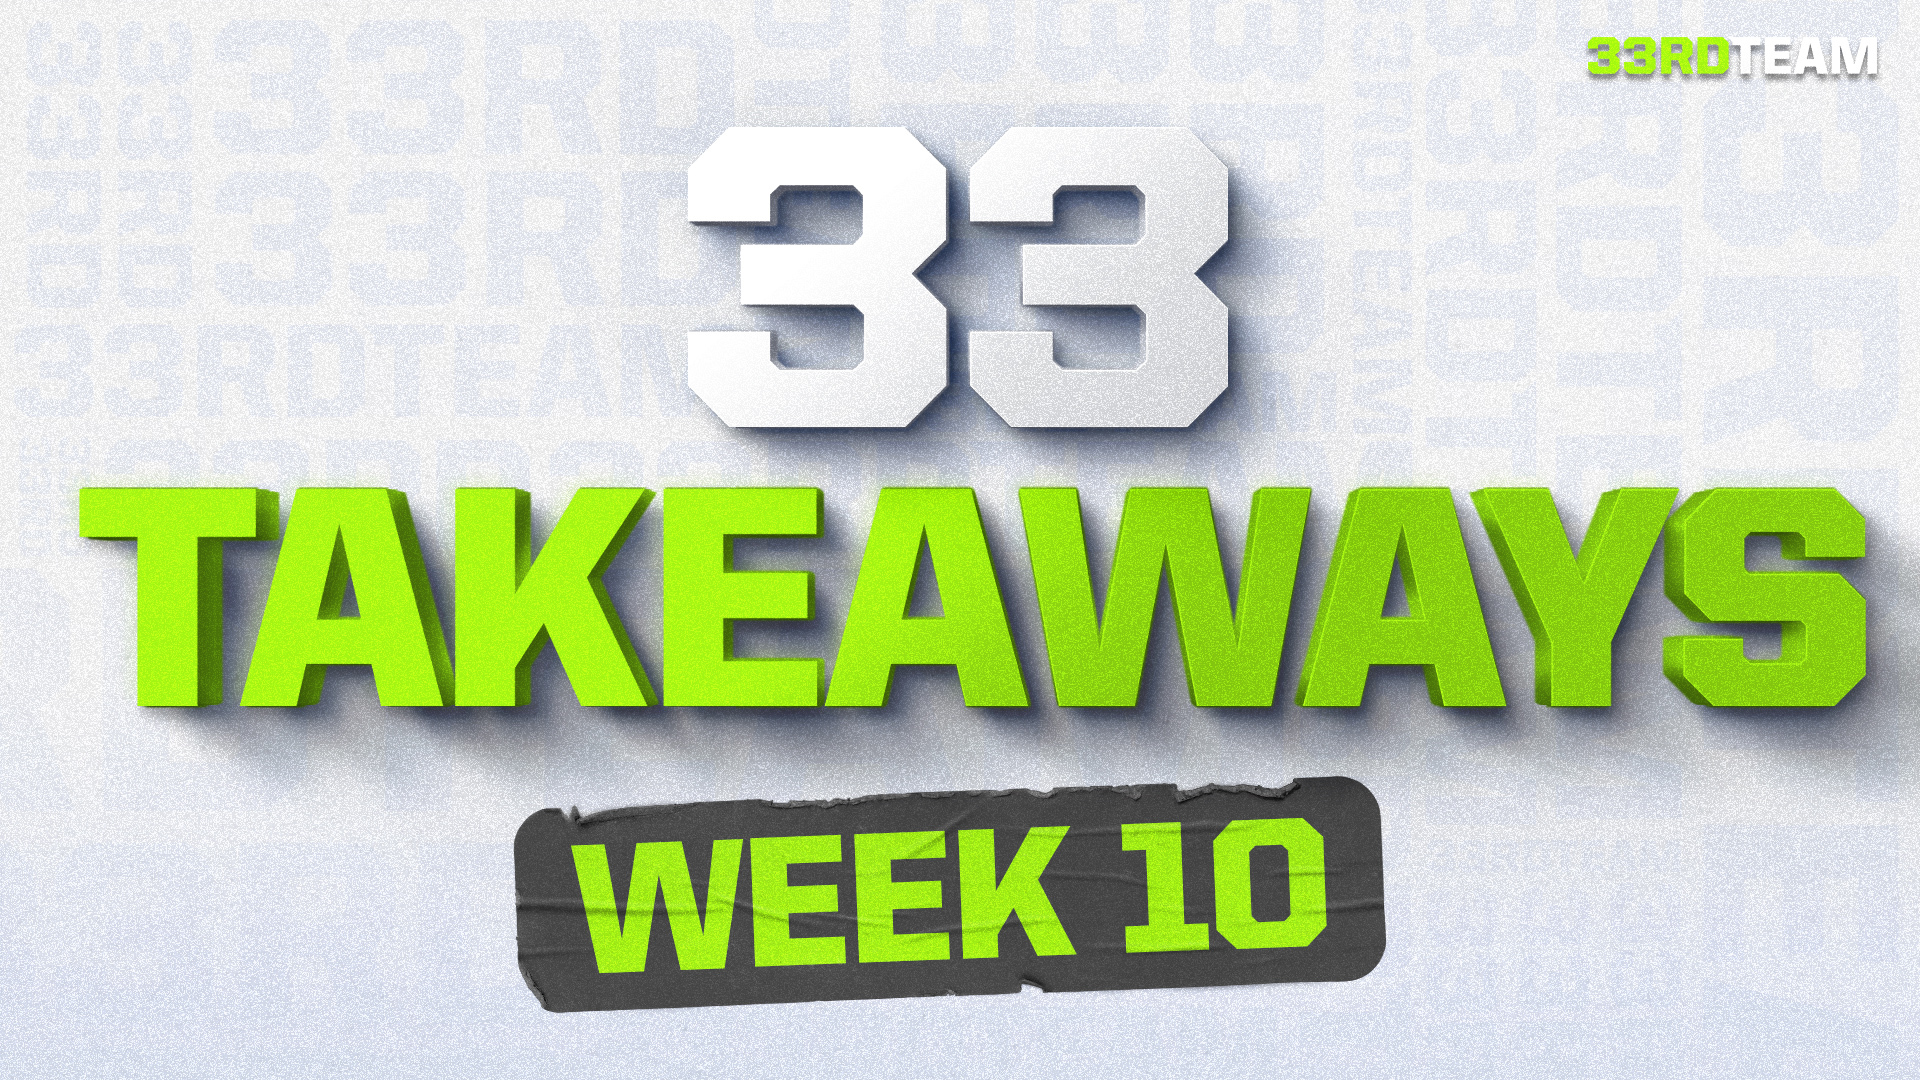 What We Learned: 33 Expert Takeaways From Week 10